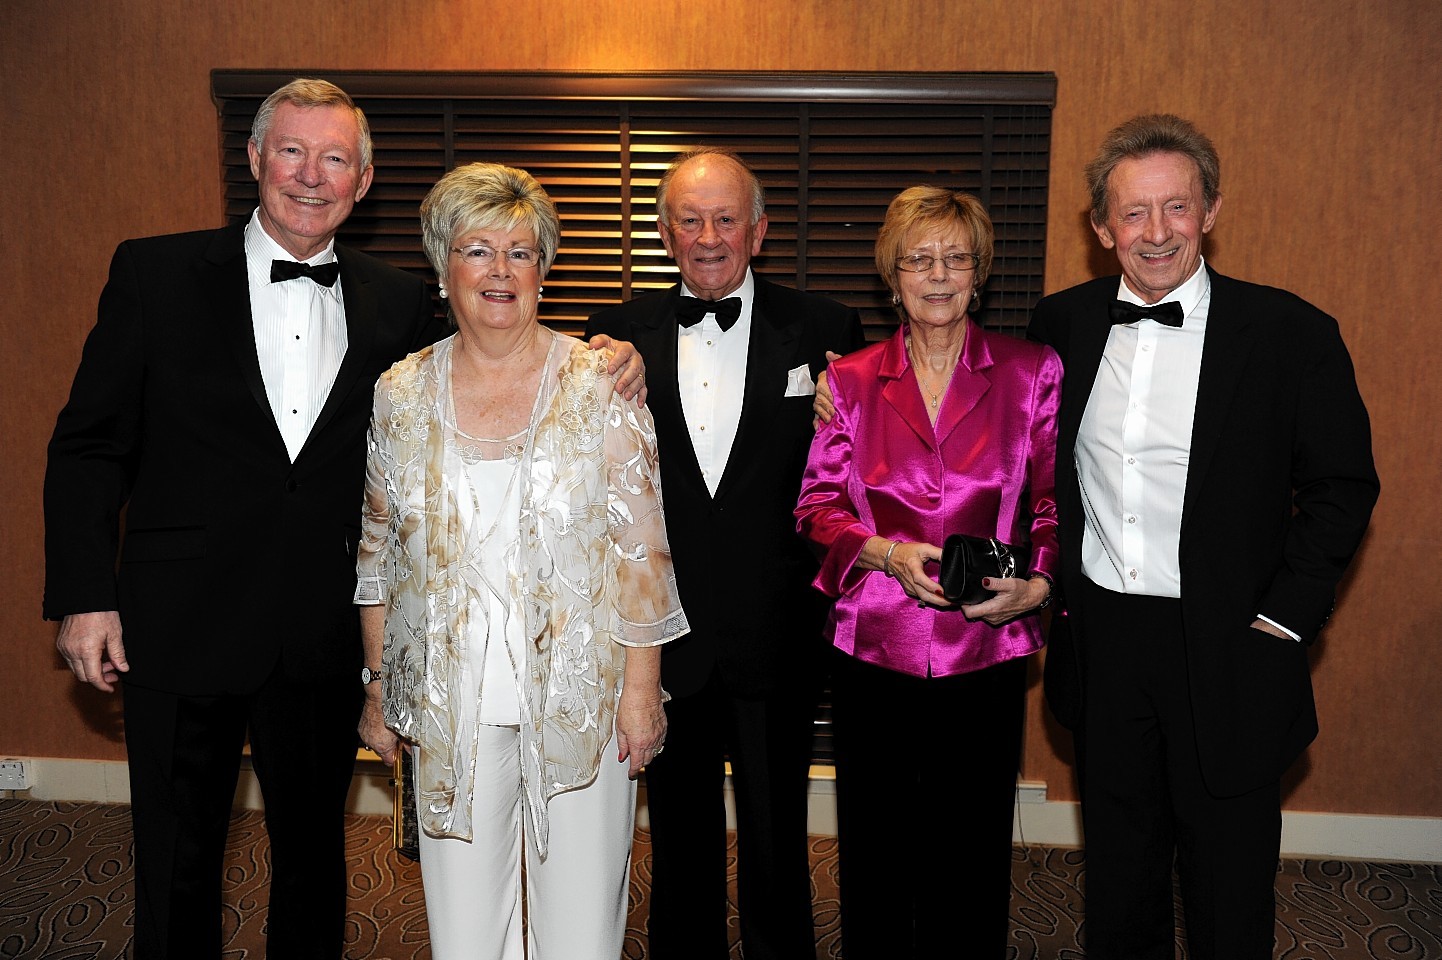 Sir Alex Ferguson, Diane Law, Stewart Spence, Cathy Ferguson and Denis Law.
Photographs by Kenny Elrick.